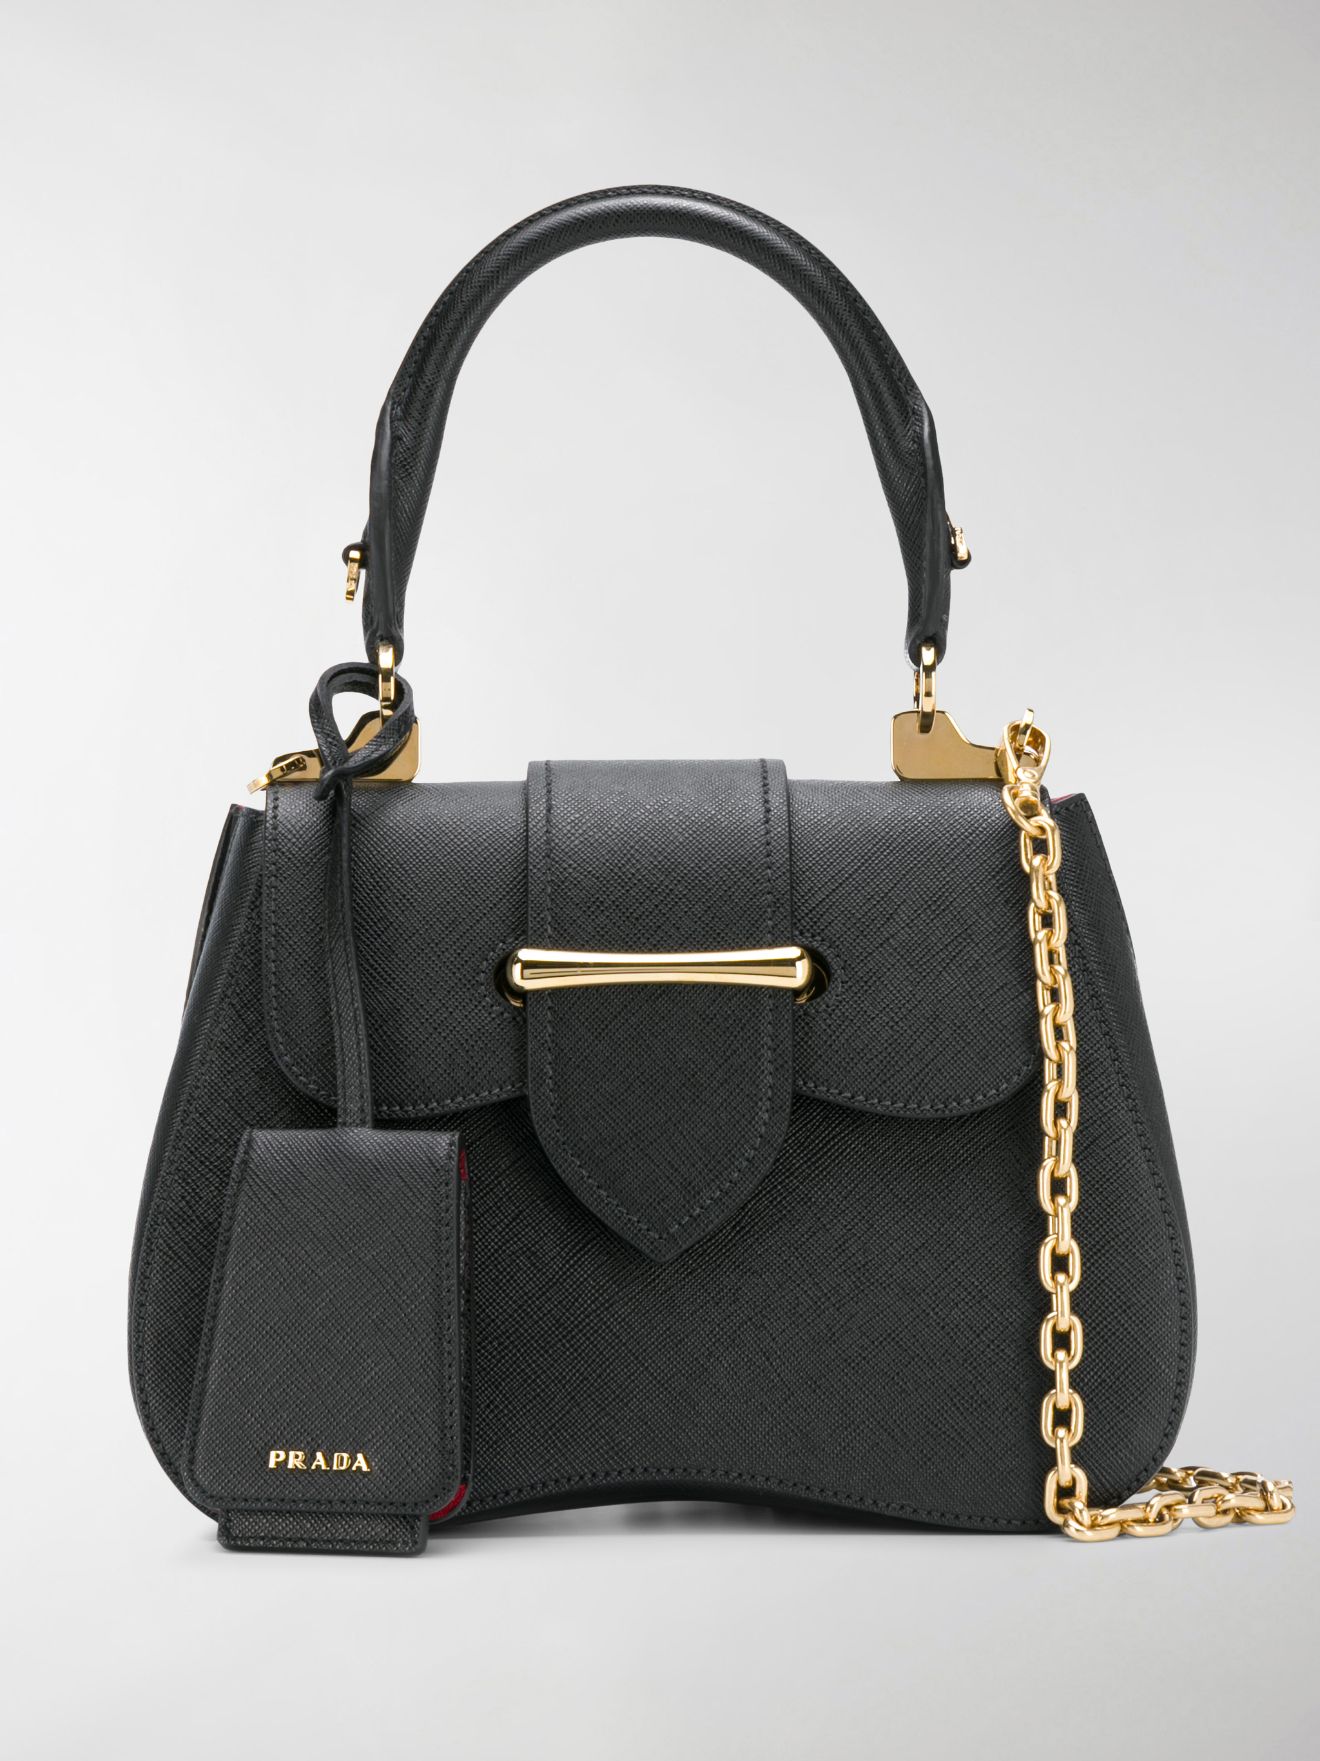 Prada Sidonie Saffiano leather bag black | MODES